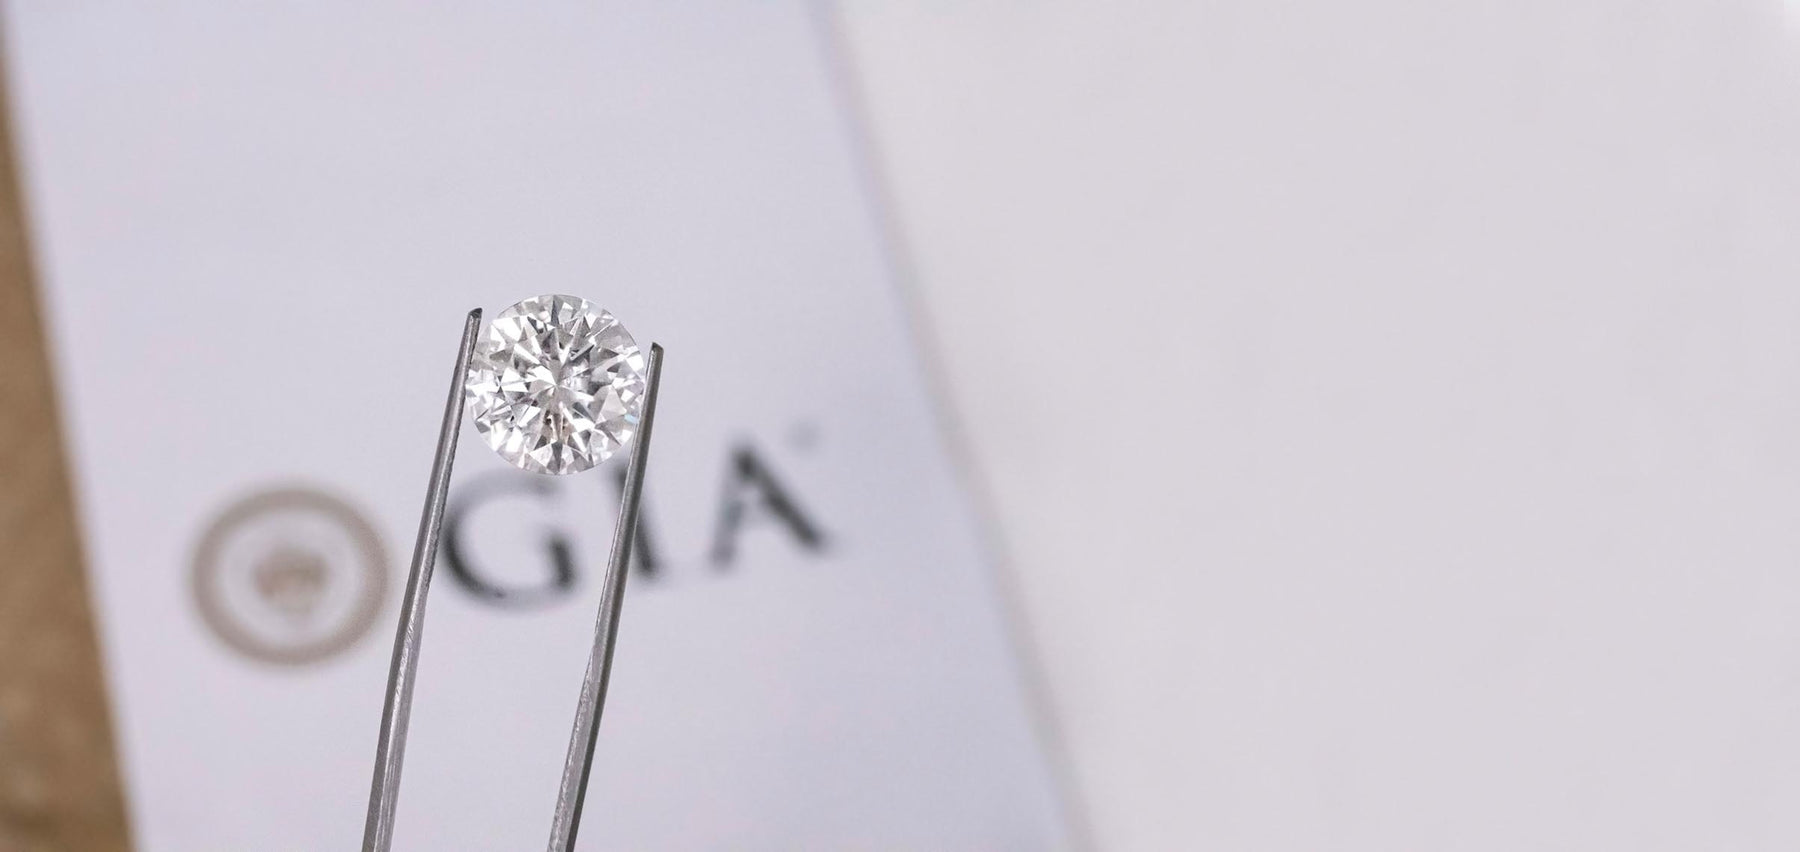 GIA certified diamond, round brilliant cut diamonds, Certified diamond, diamond held by tweezers, The Four C's 